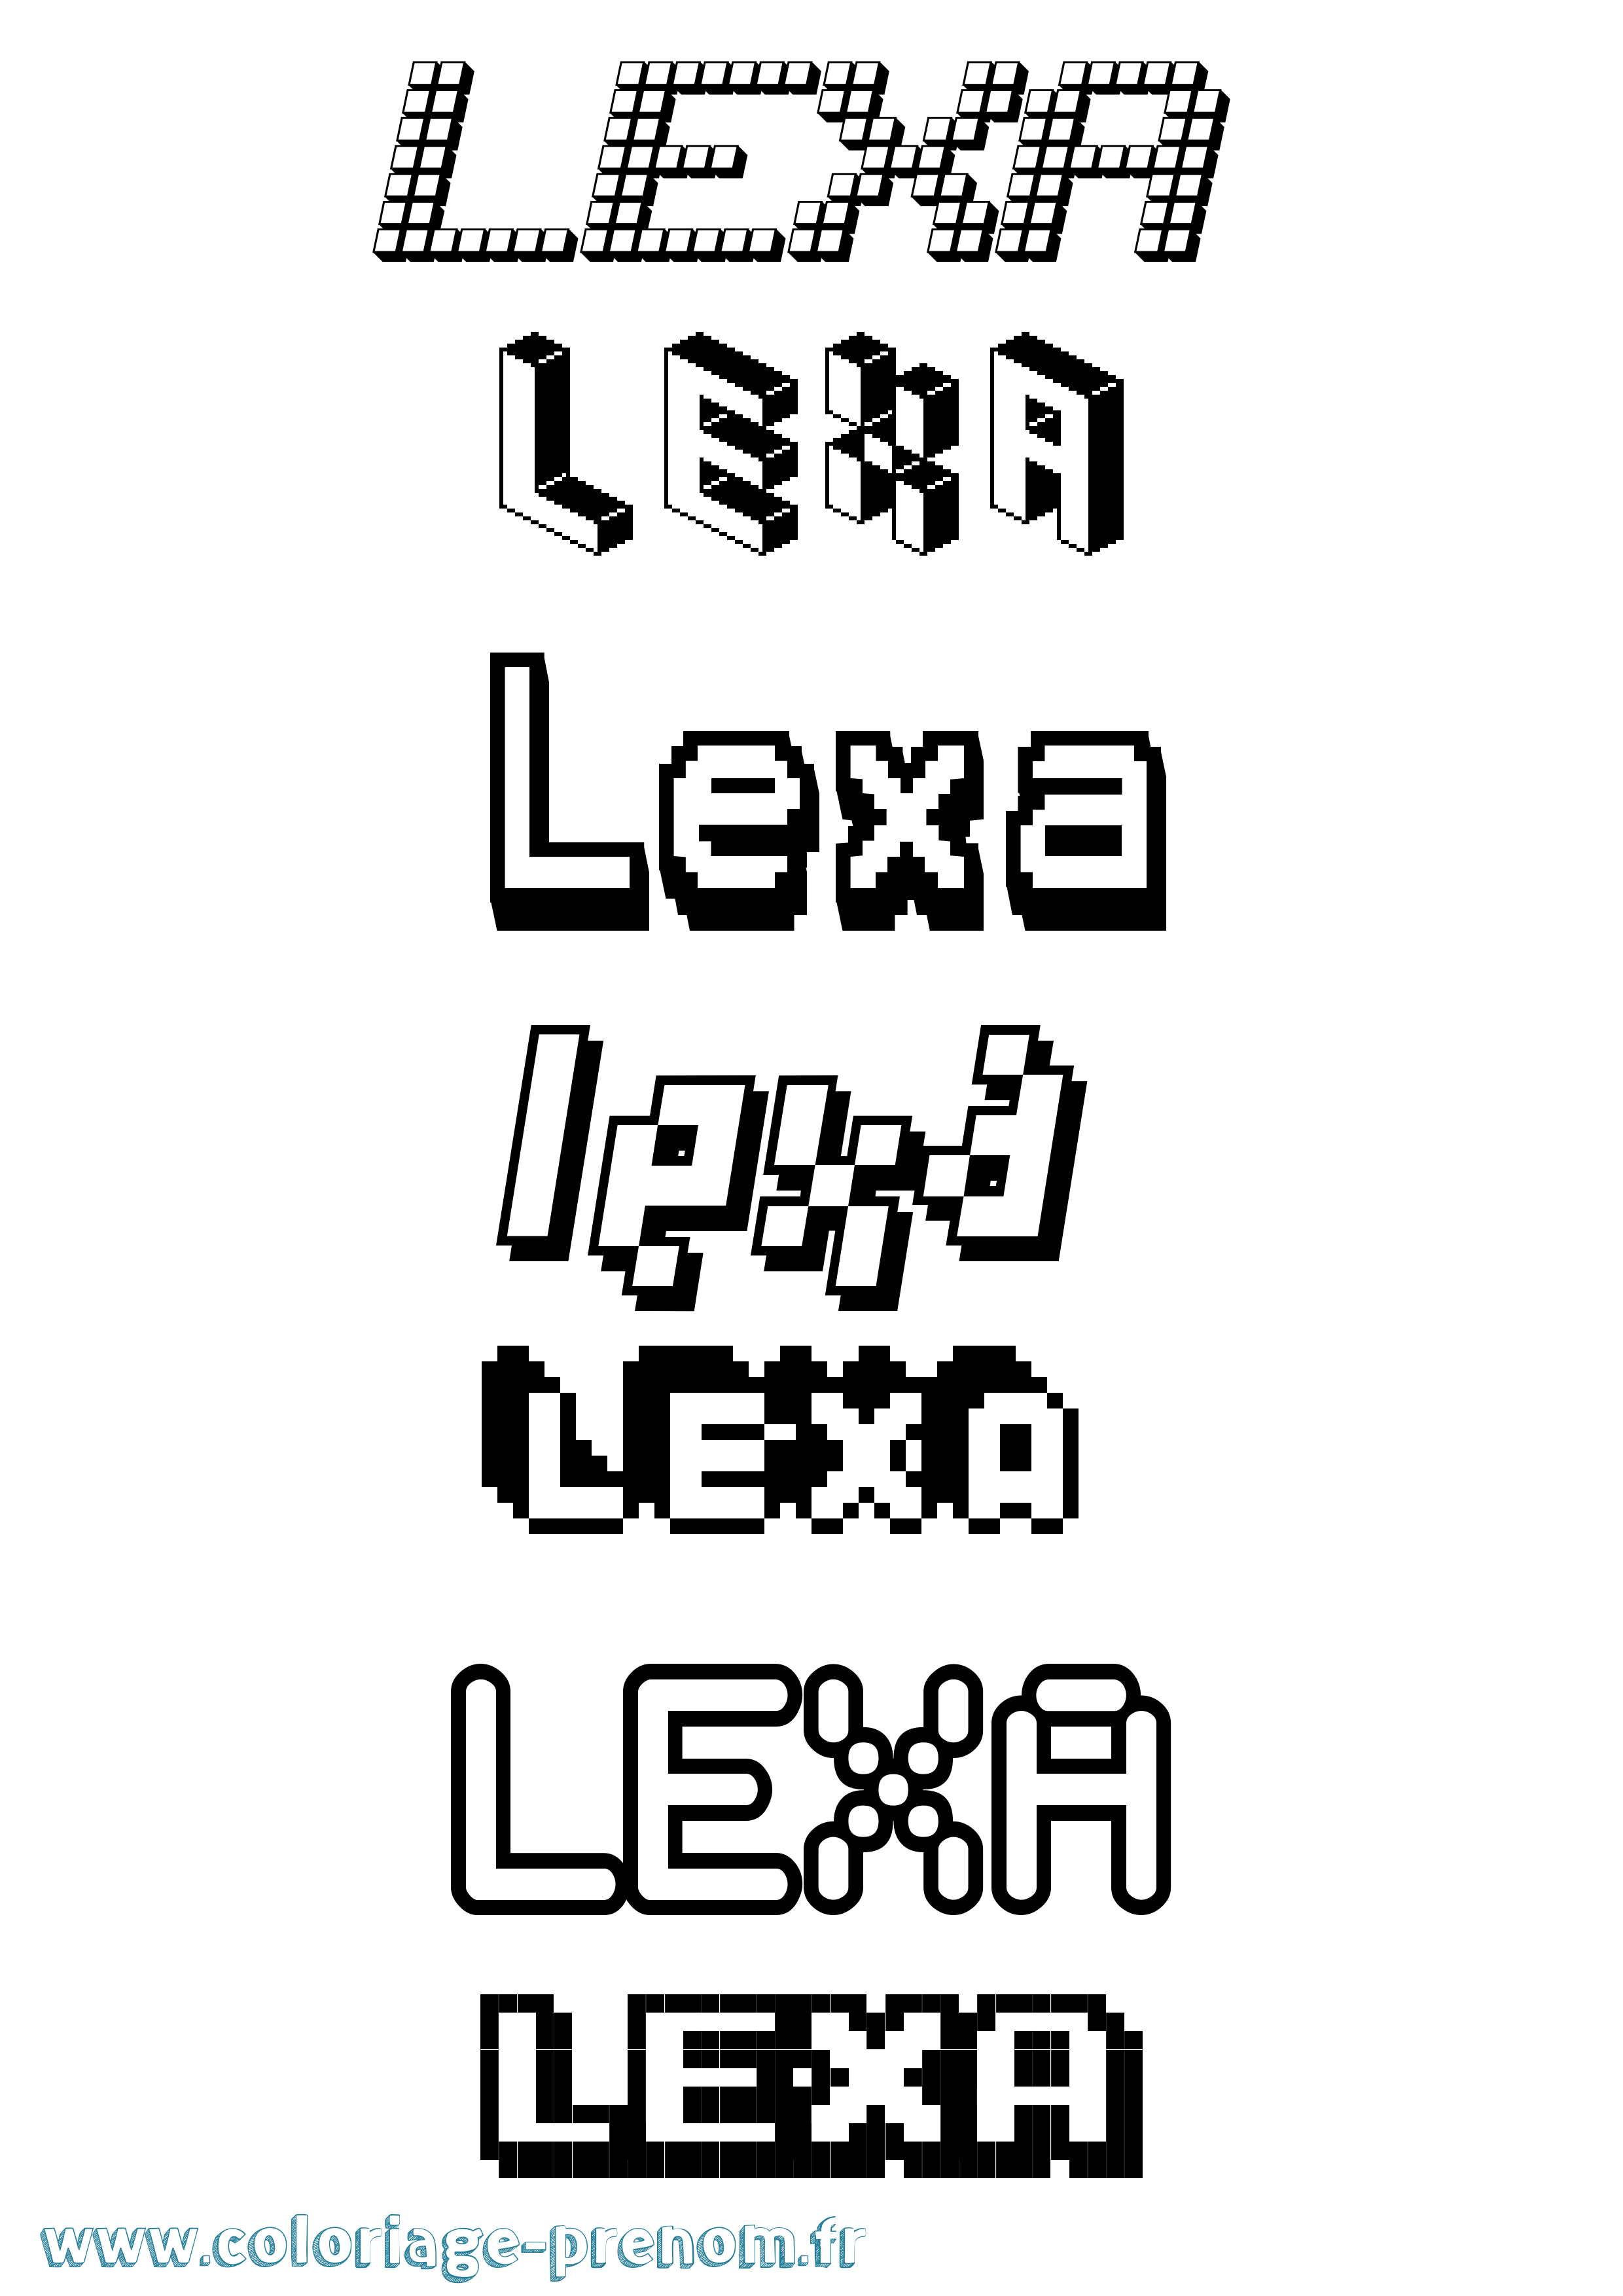 Coloriage prénom Lexa Pixel